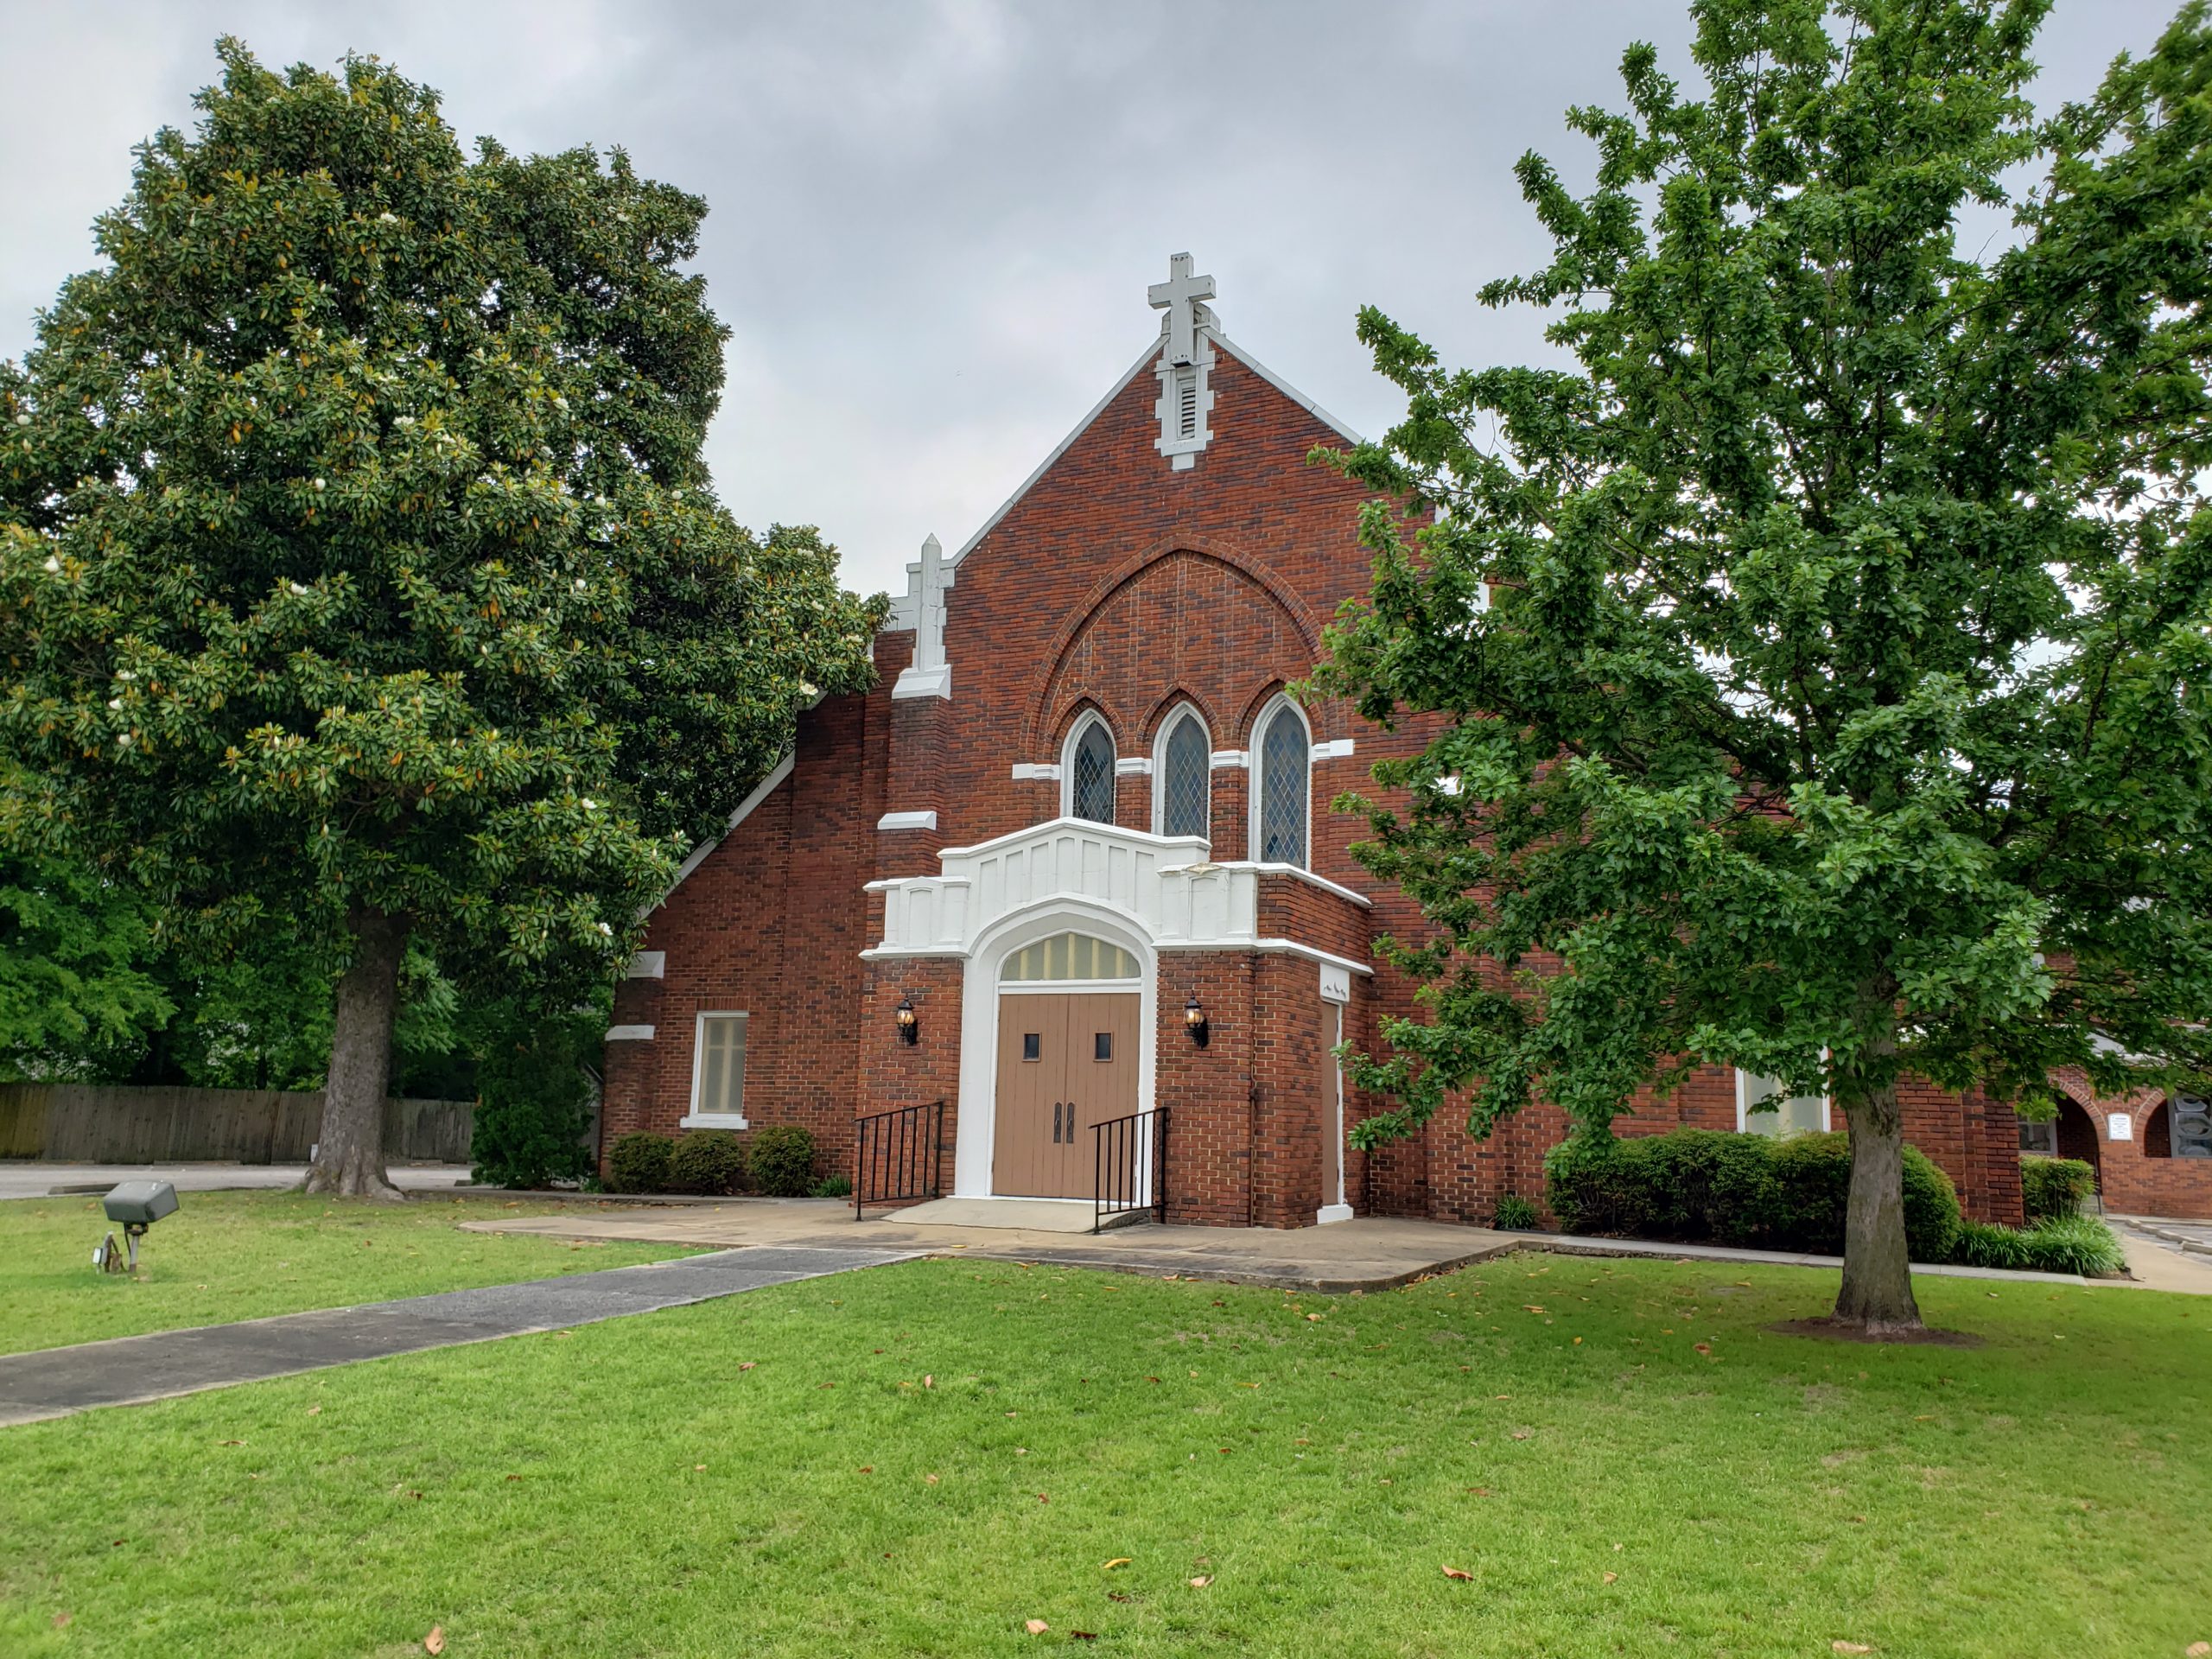 Centenary United Methodist Church